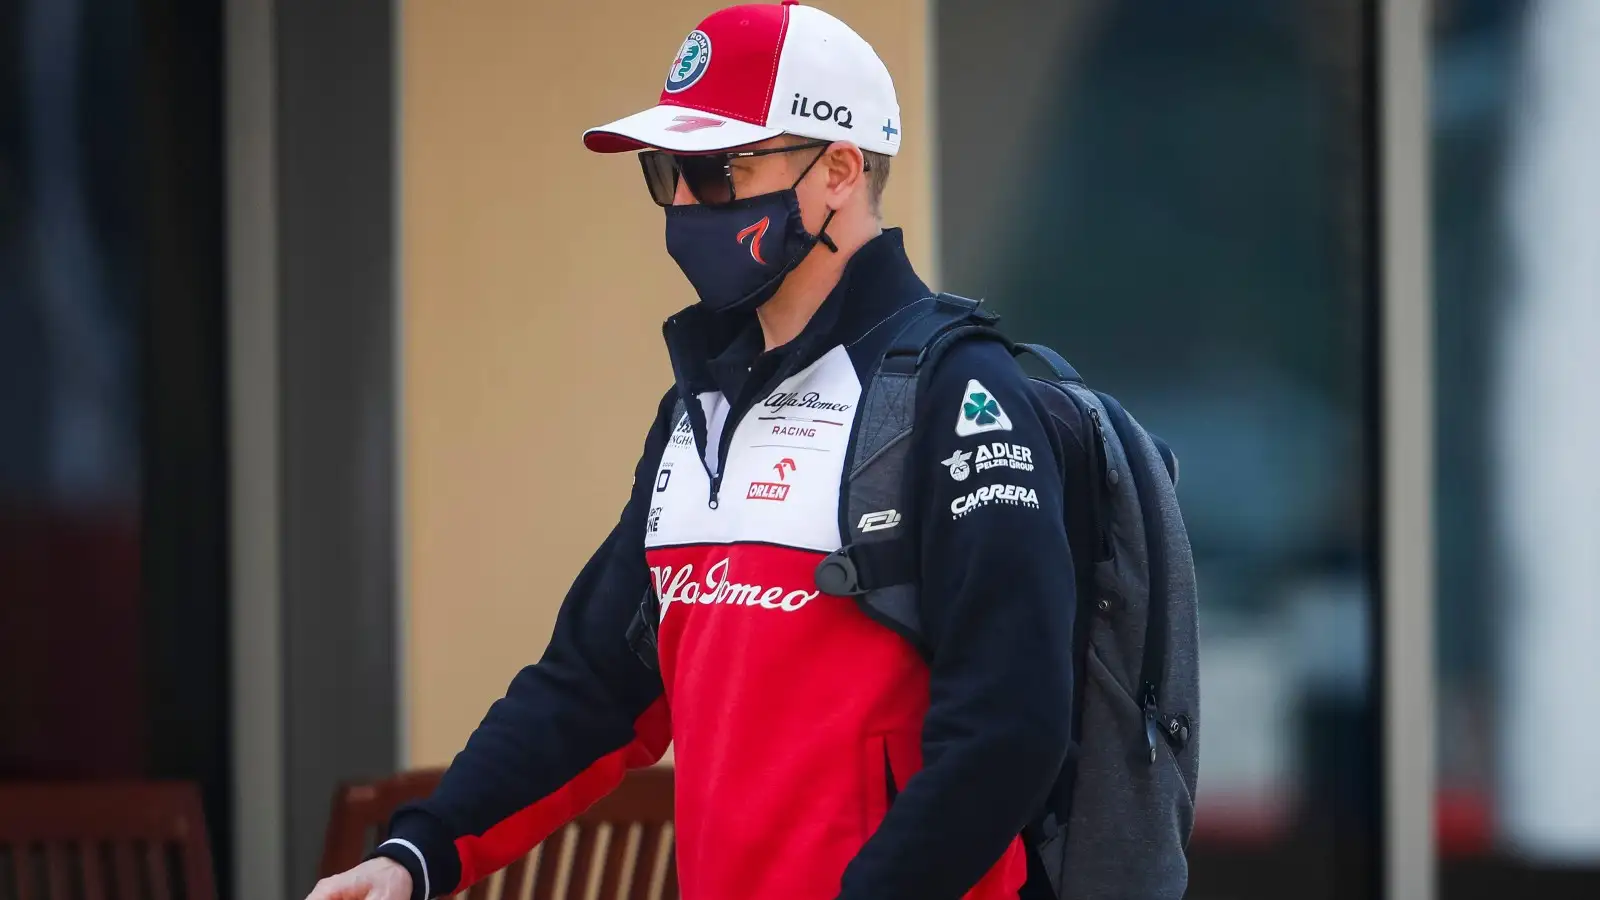 Kimi Raikkonen in Alfa Romeo team gear. Abu Dhabi, December 2021.